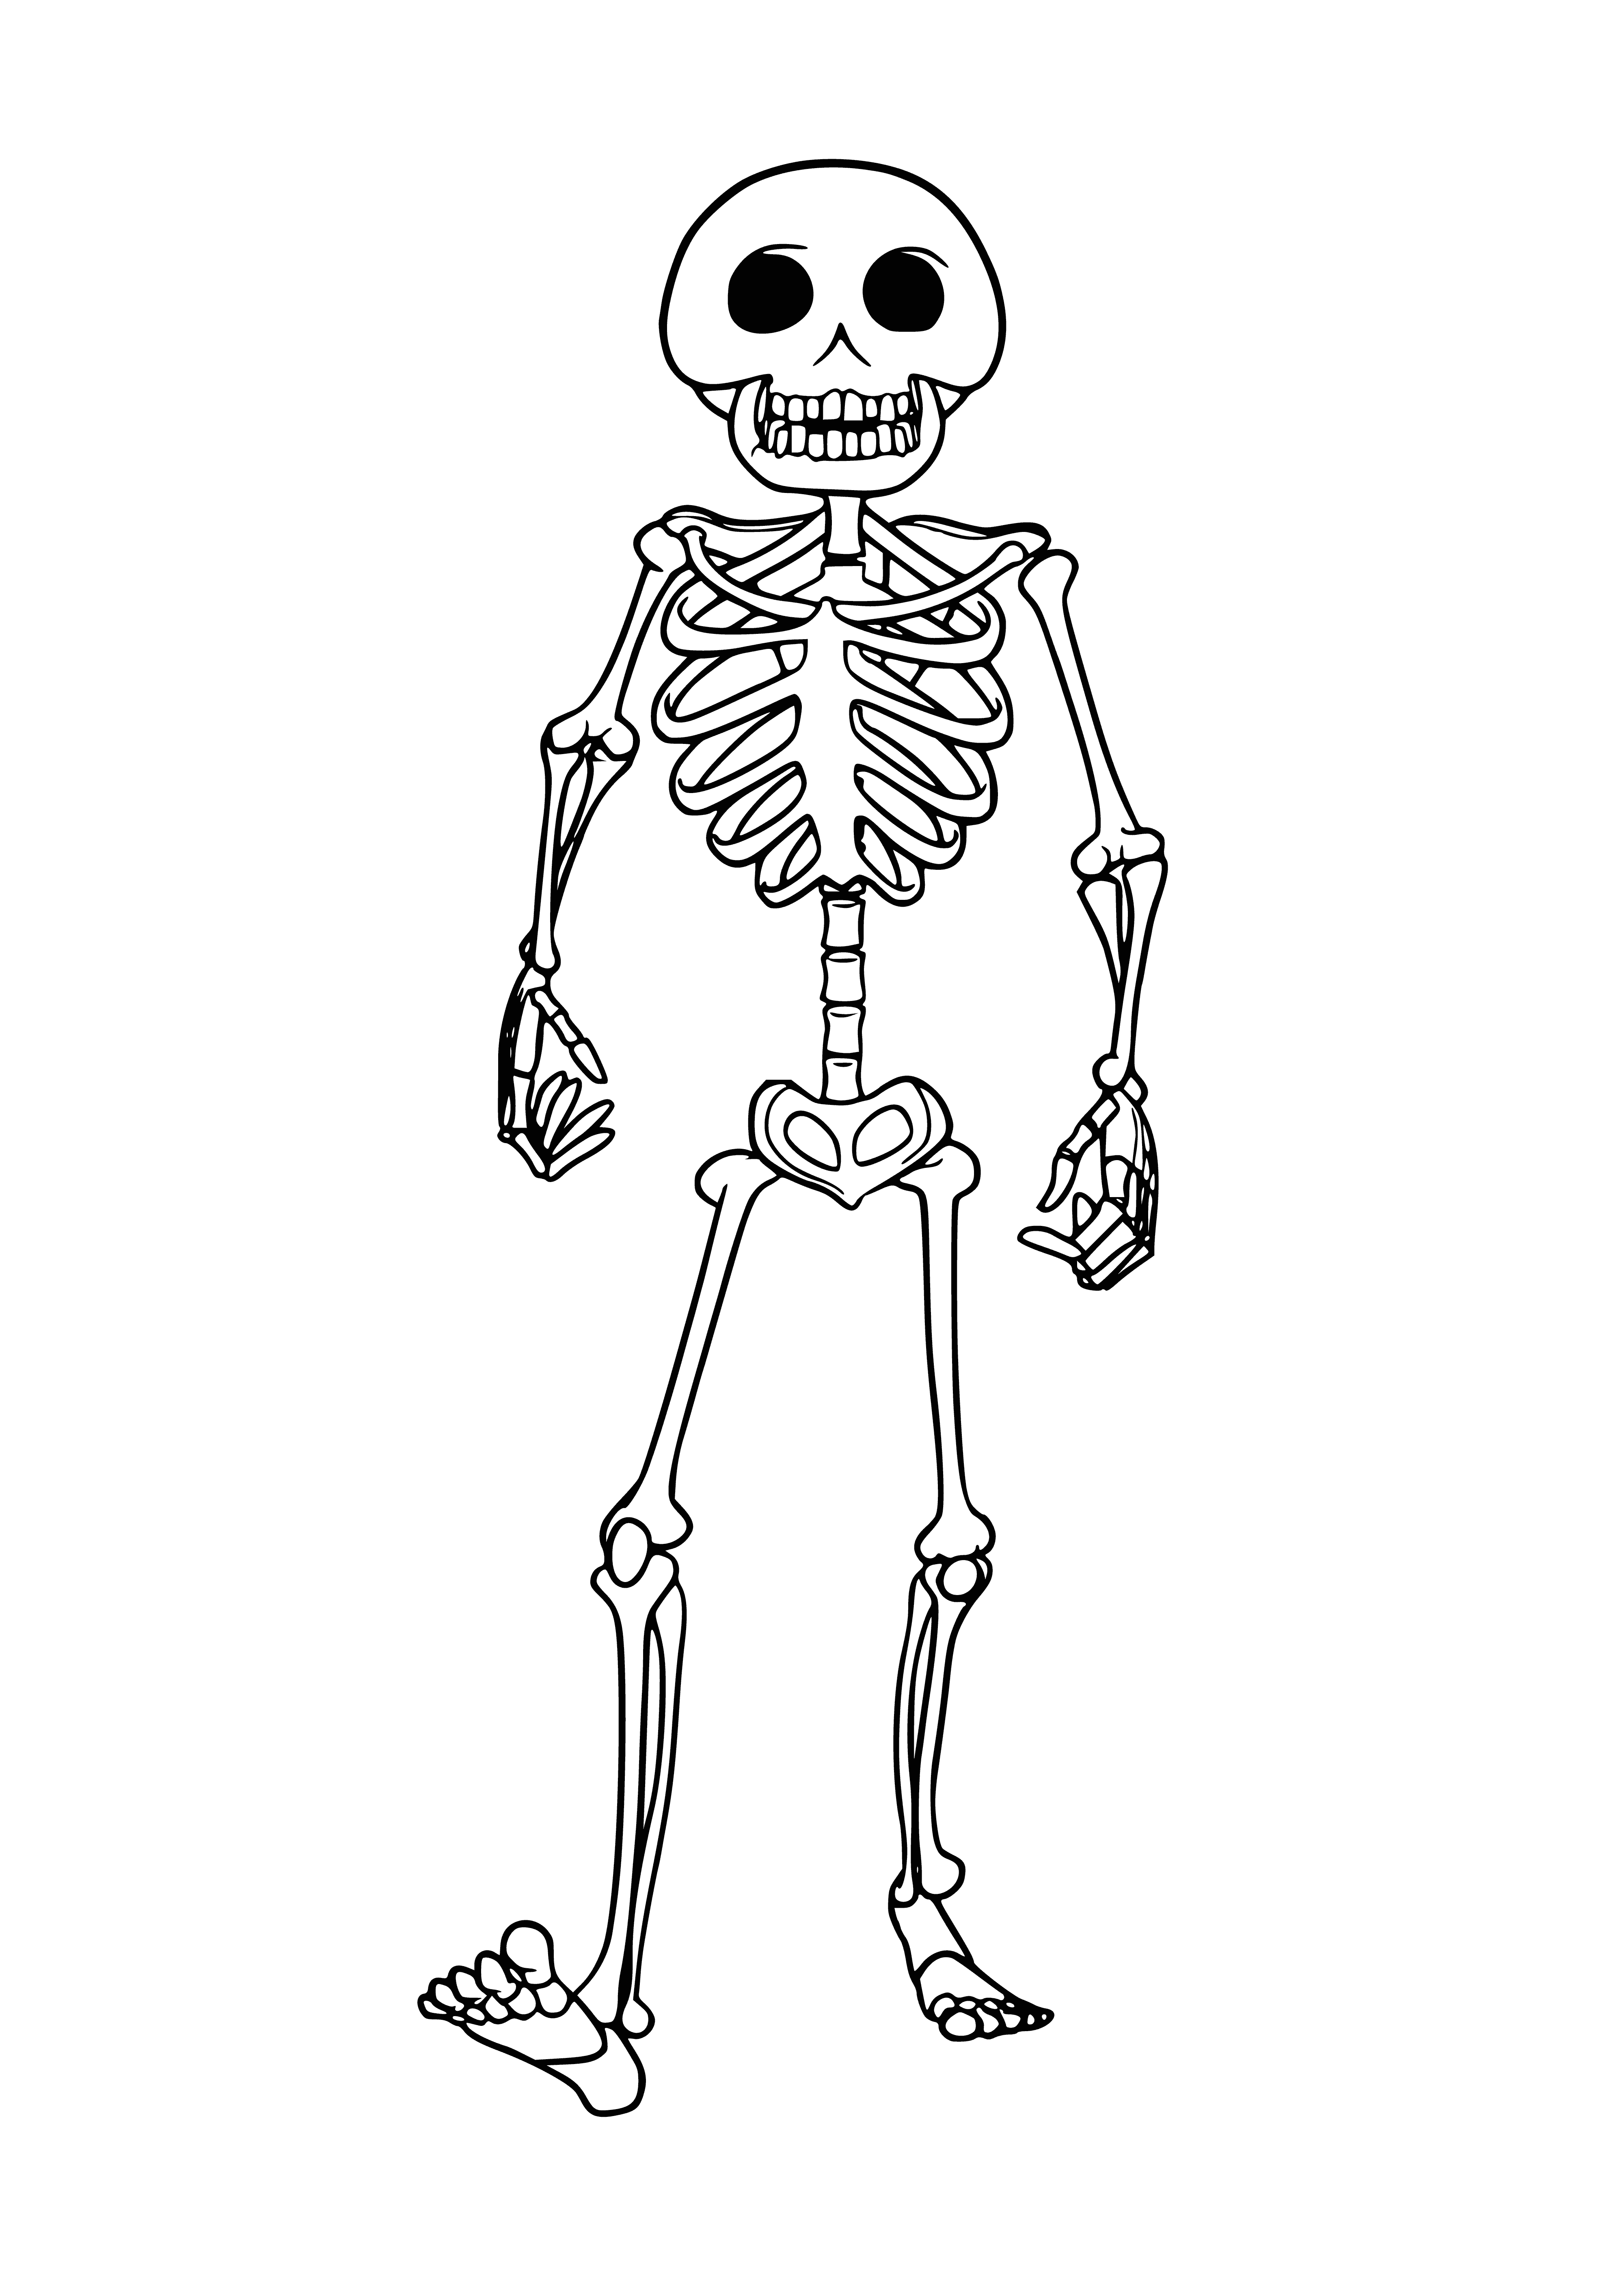 Skeleton coloring page